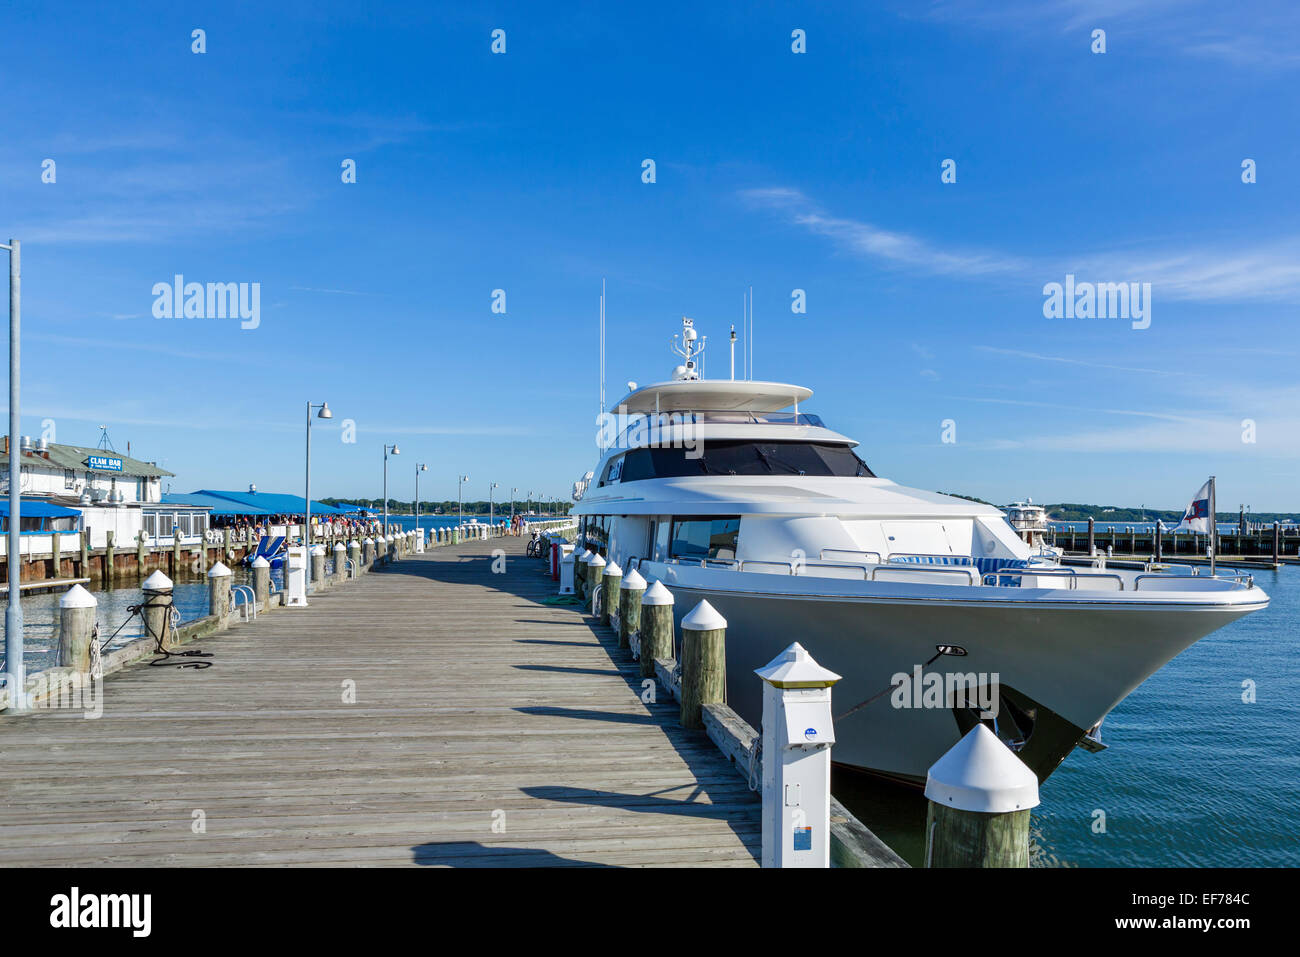 Luxury yacht docked in the village of Greenport, Suffolk County, Long Island, NY, USA Stock Photo